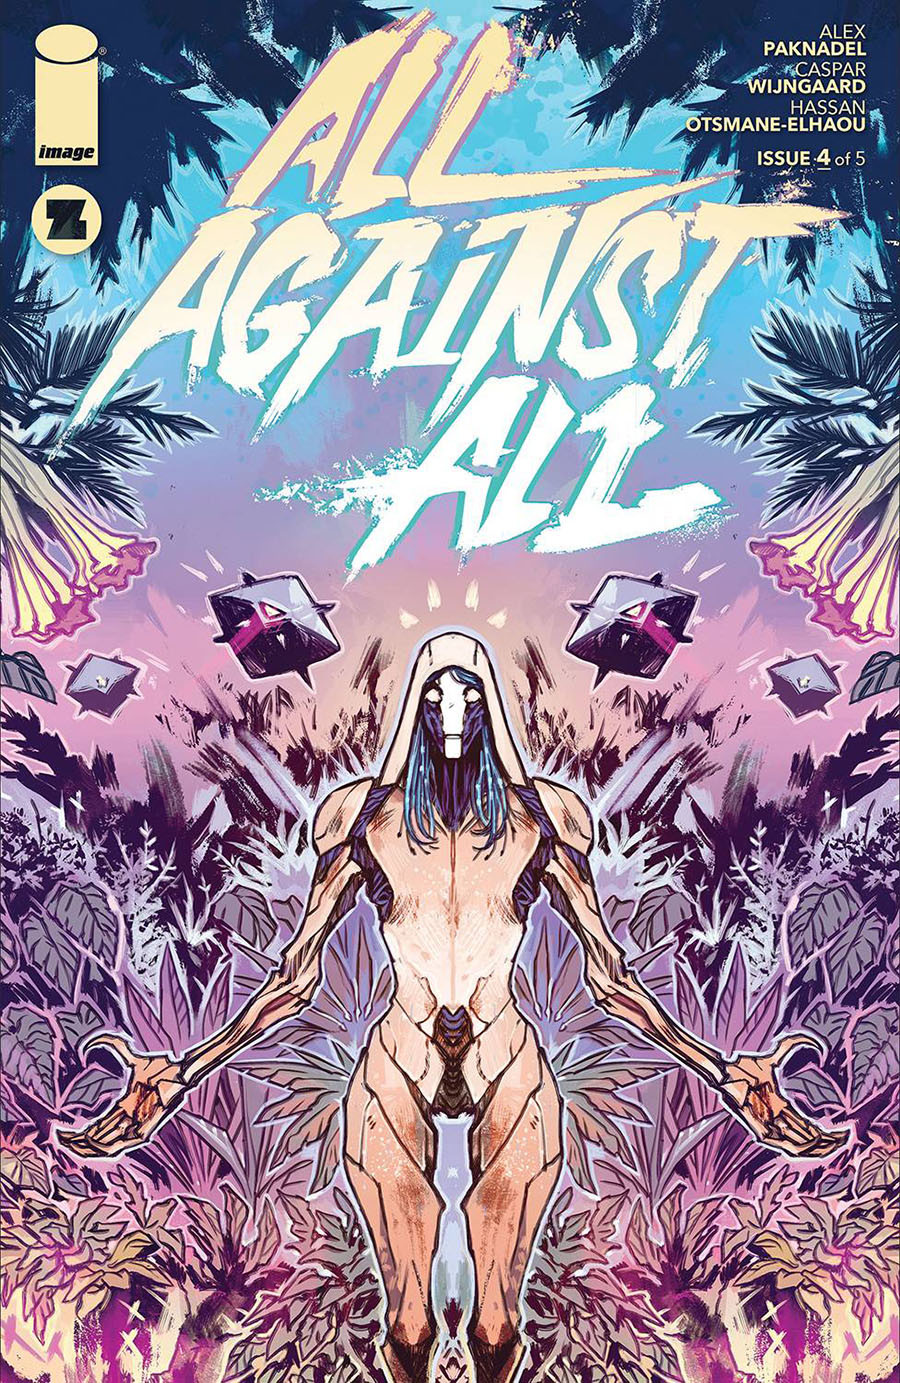 All Against All #4 Cover A Regular Caspar Wijngaard Cover